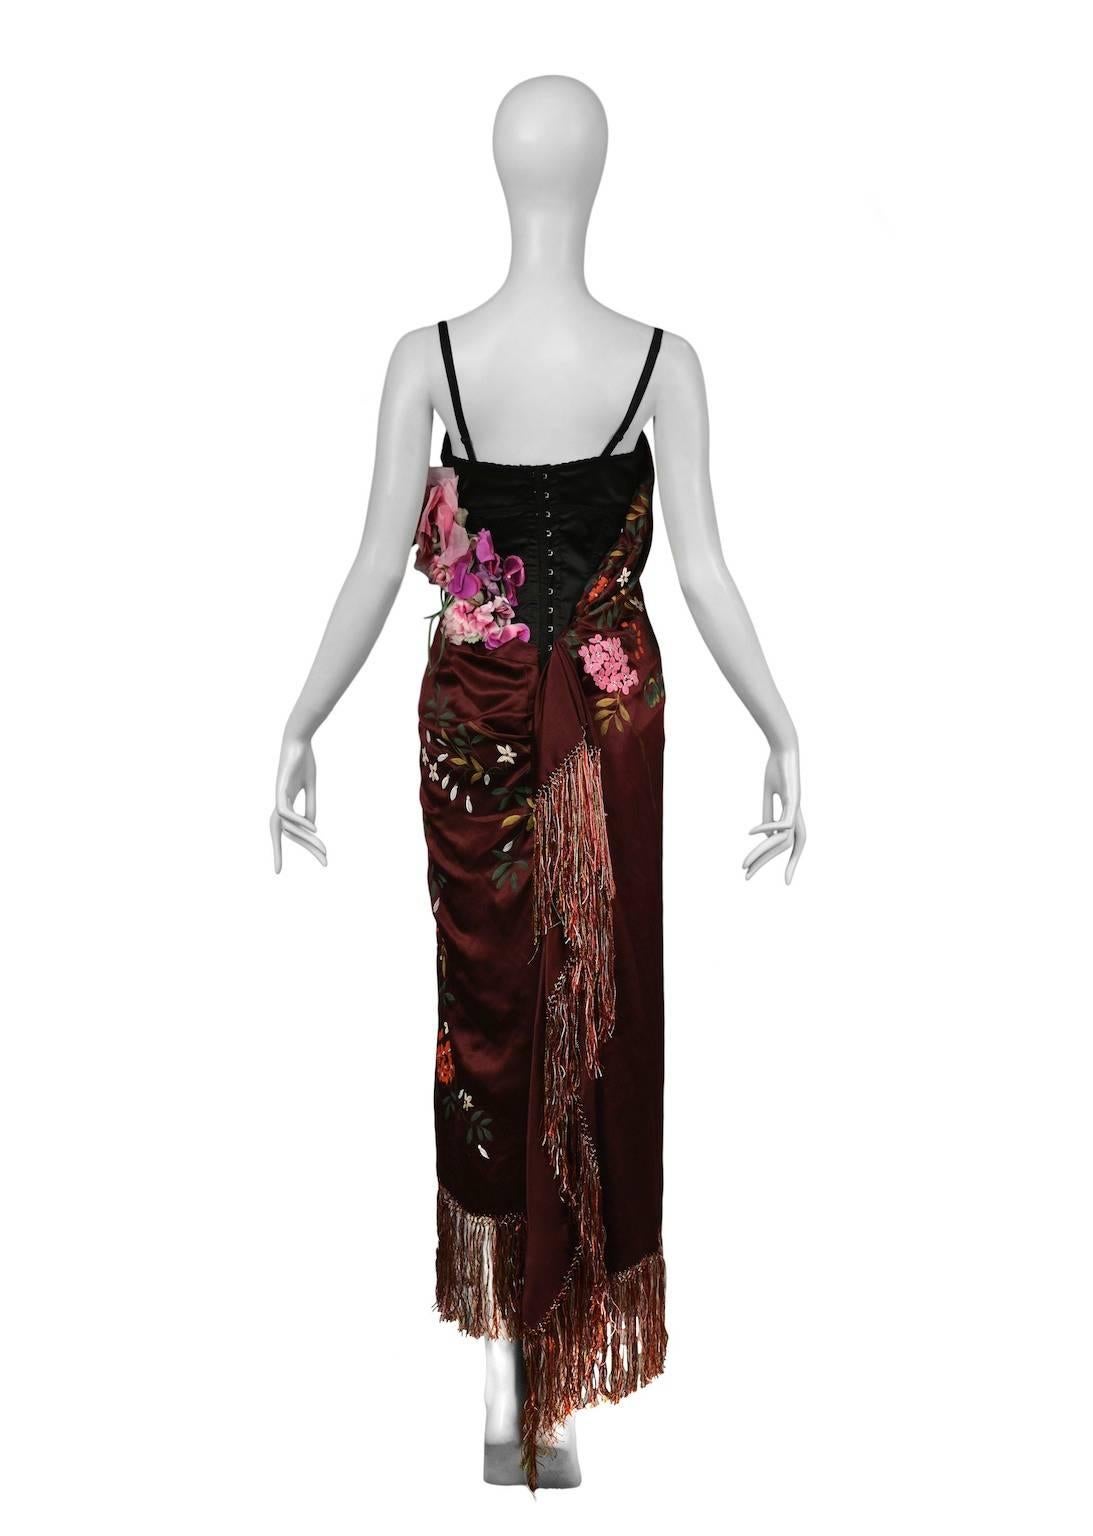 Women's Dolce & Gabbana Hand Painted Floral Satin Dress 1998